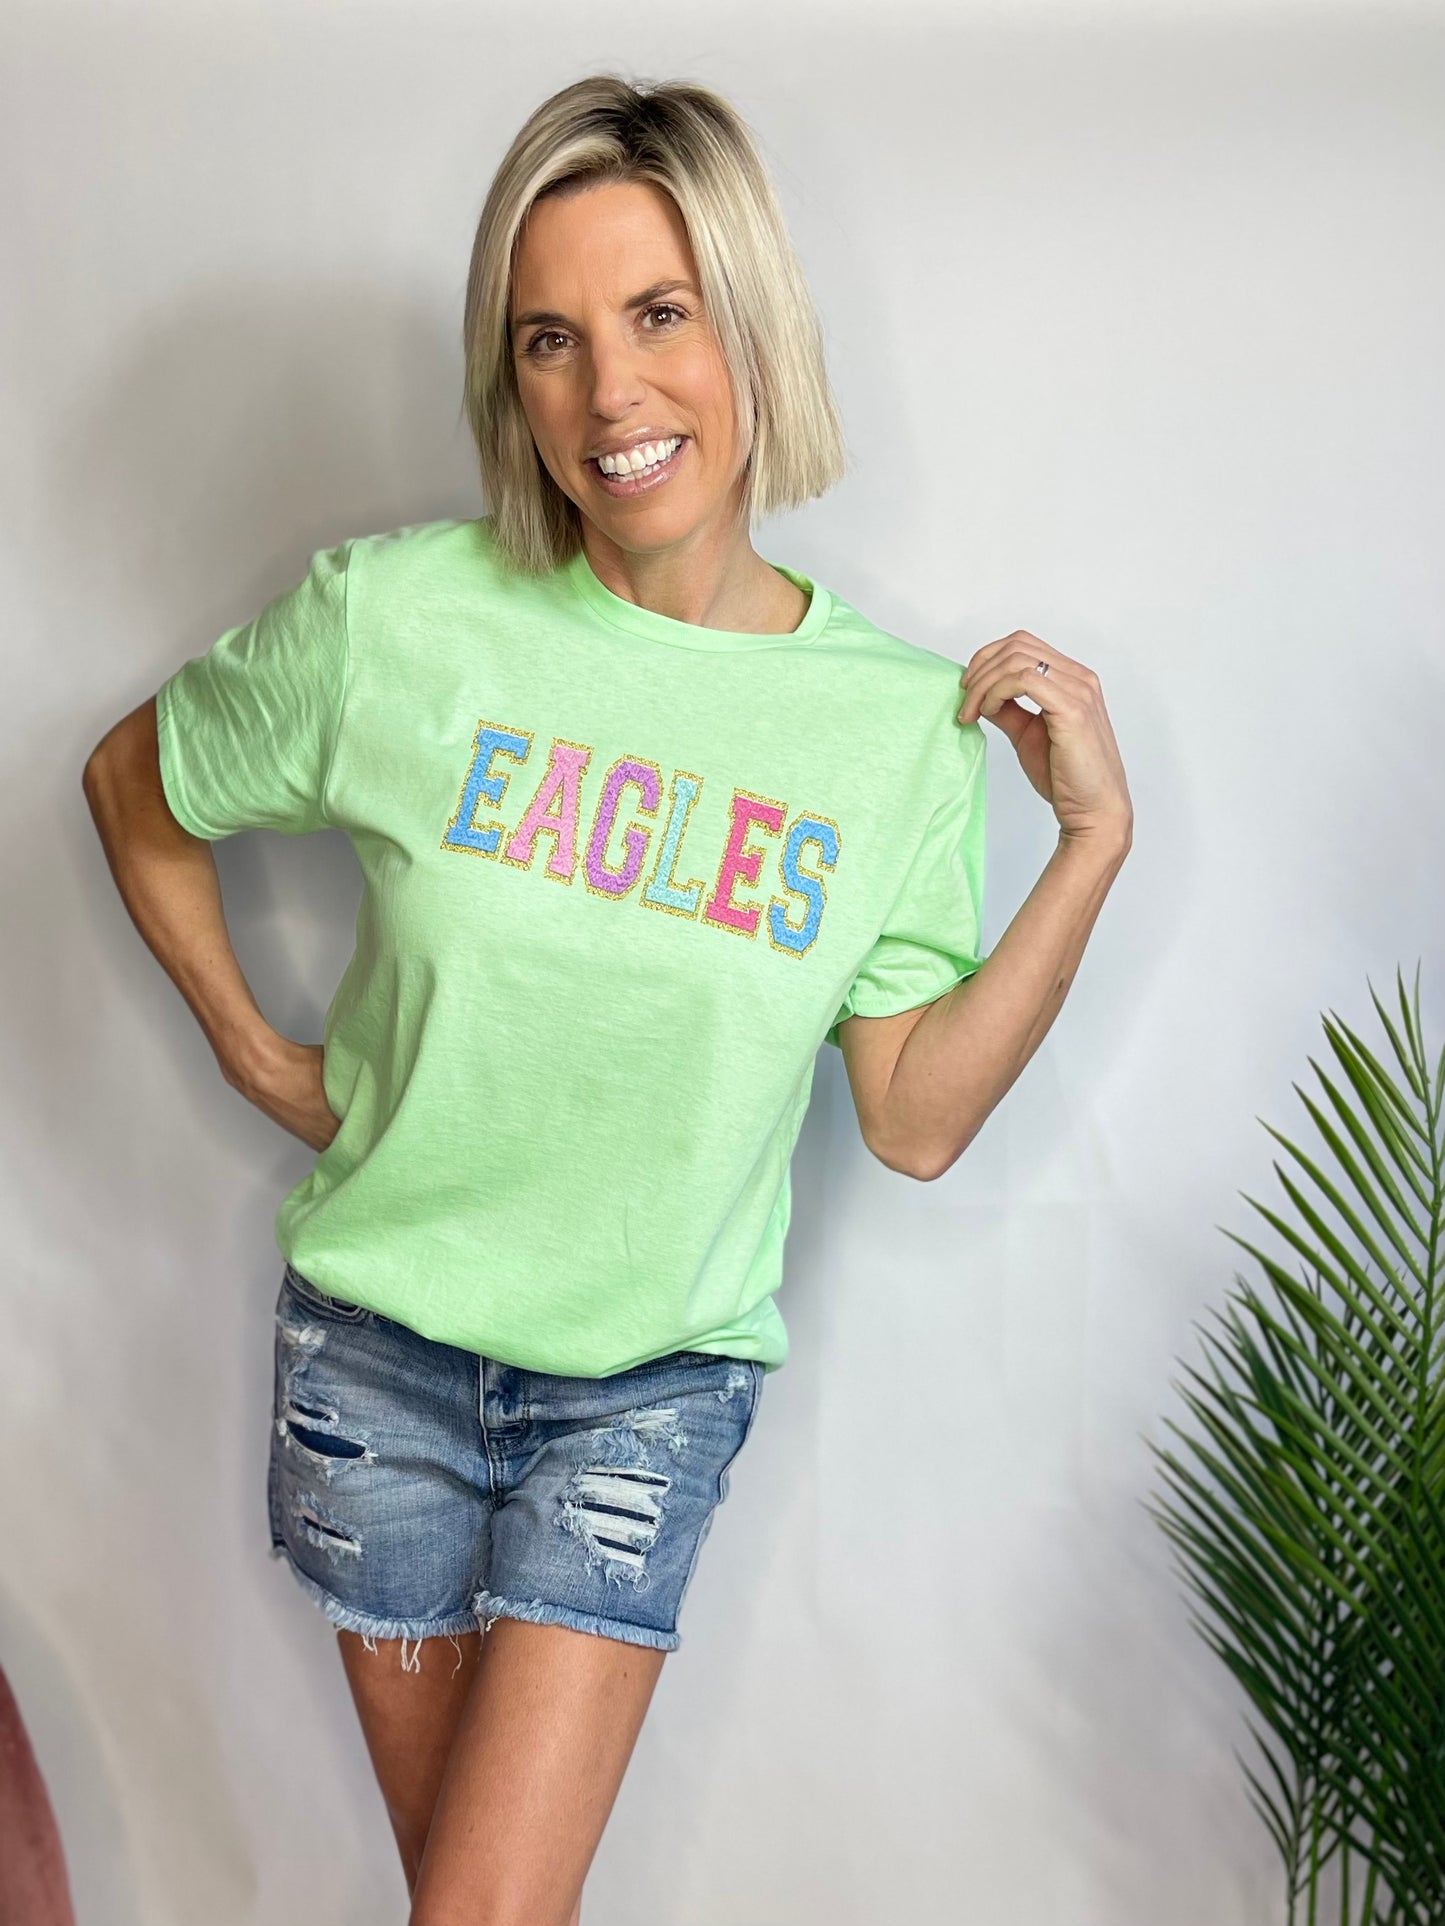 Eagles Varsity Block T’shirt new colors added!